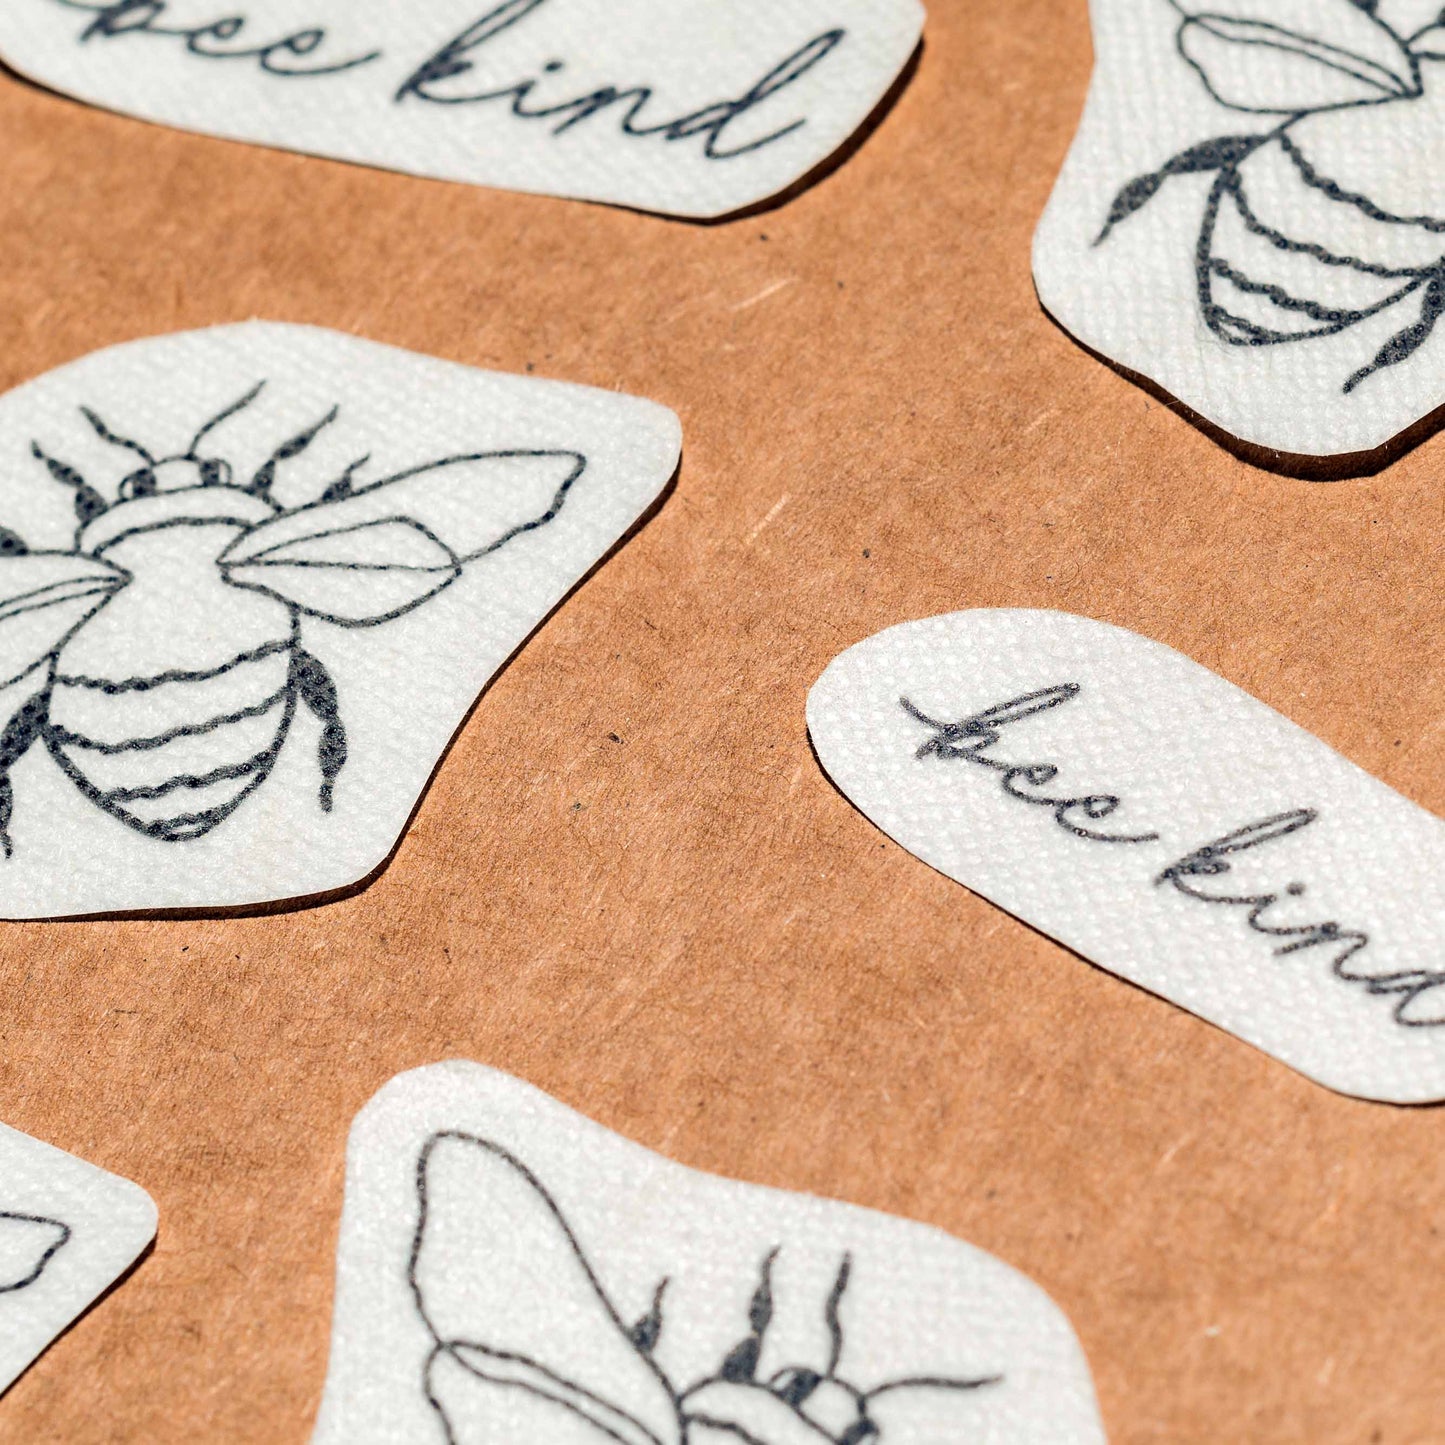 The Mindful Bumblebee - Stick & Stitch